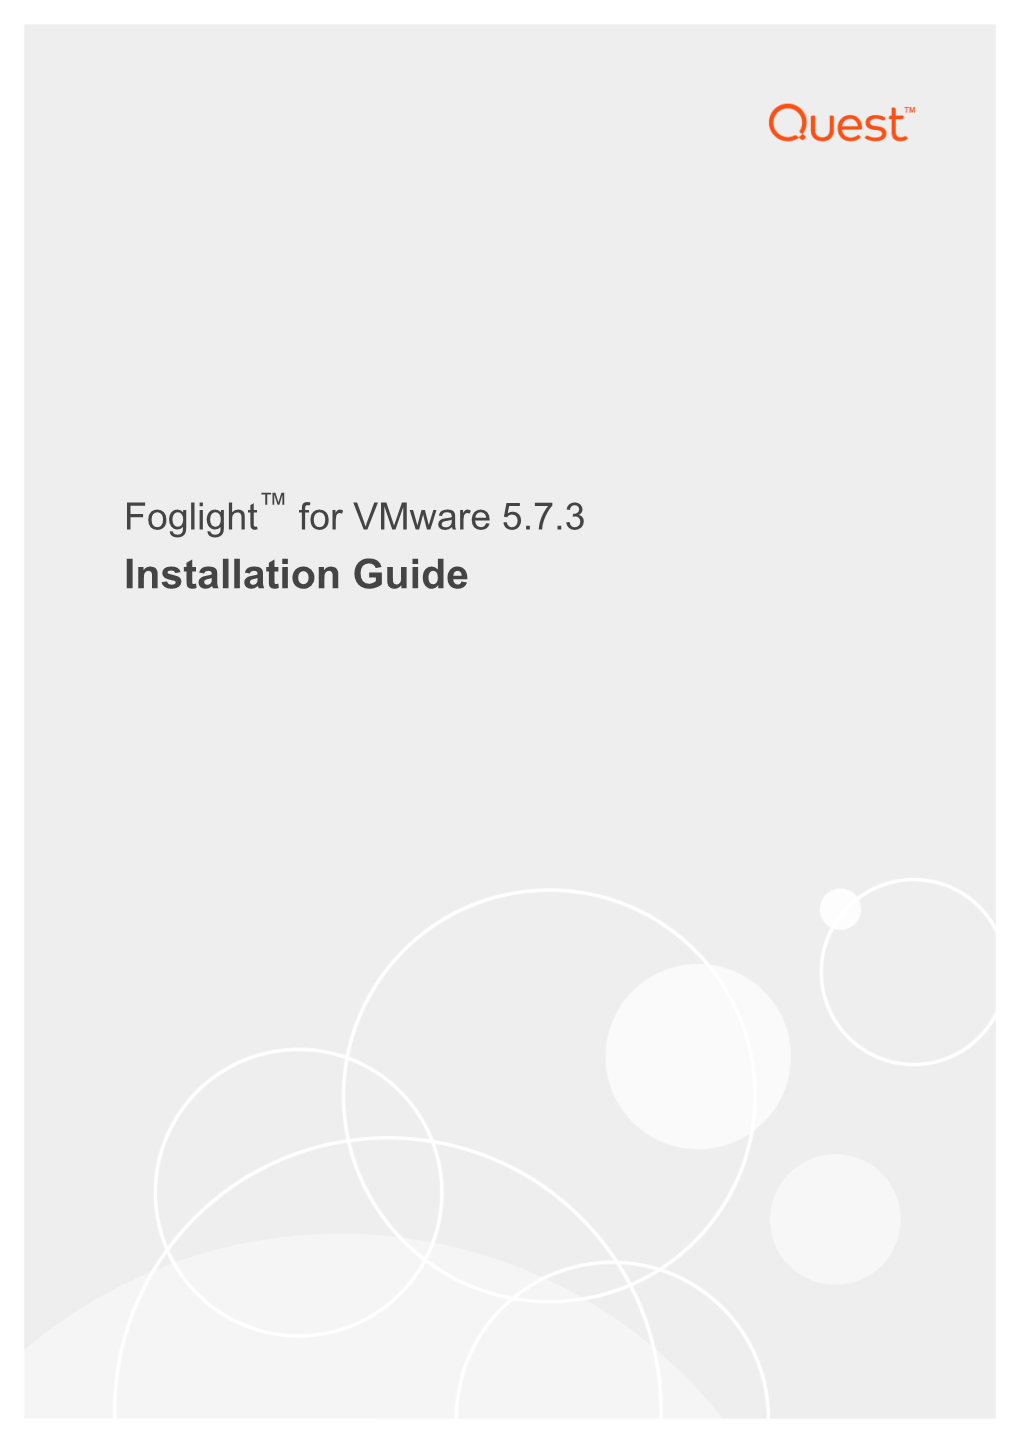 Foglight for Vmware Installation Guide